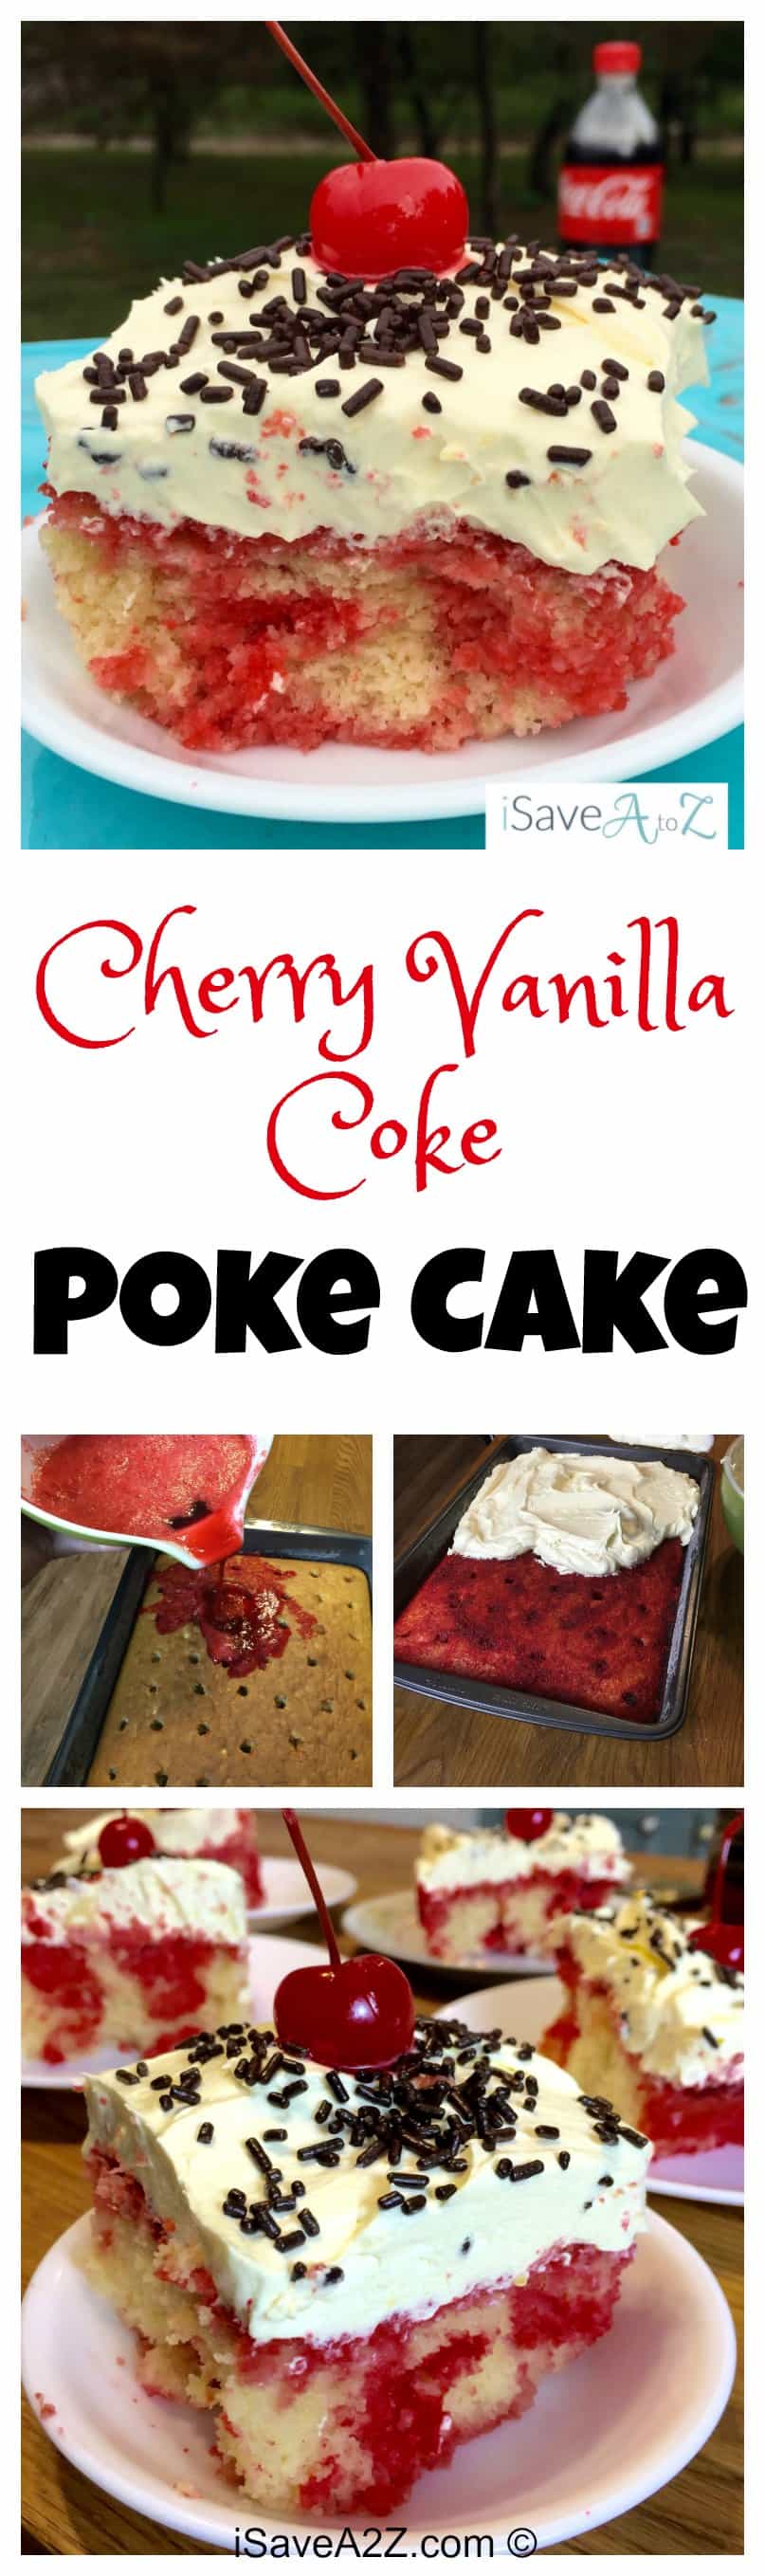 Cherry Vanilla Coke Poke Cake Recipe